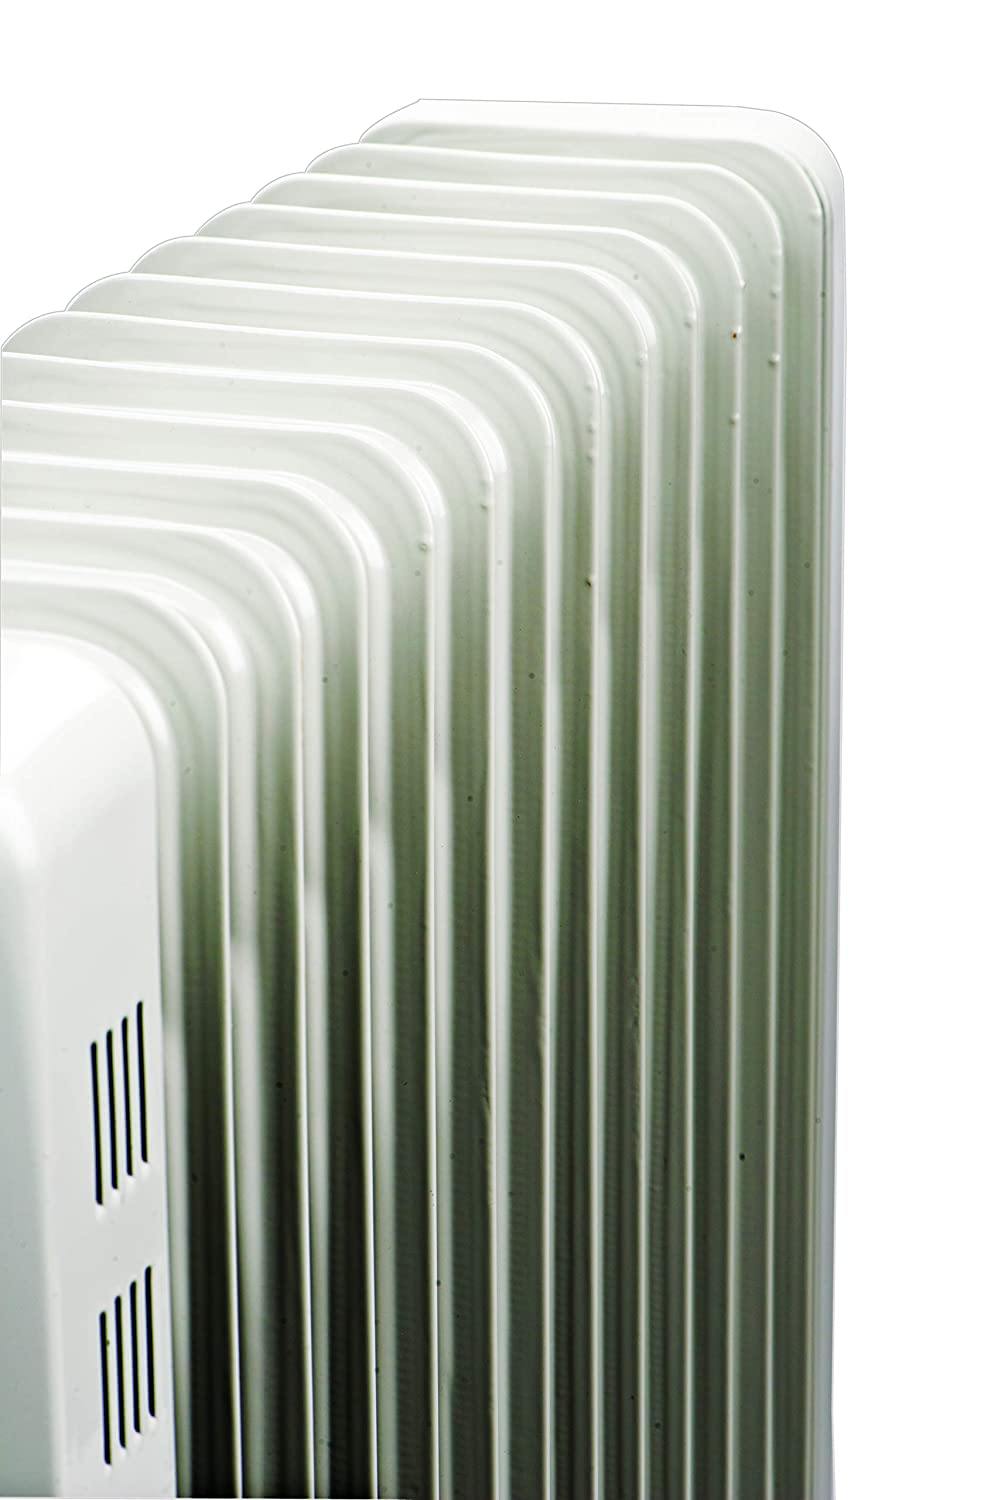 Morphy Richards OFR 13F 13-Fin 2900 Watts Oil Filled Radiator Room Heater - Mahajan Electronics Online